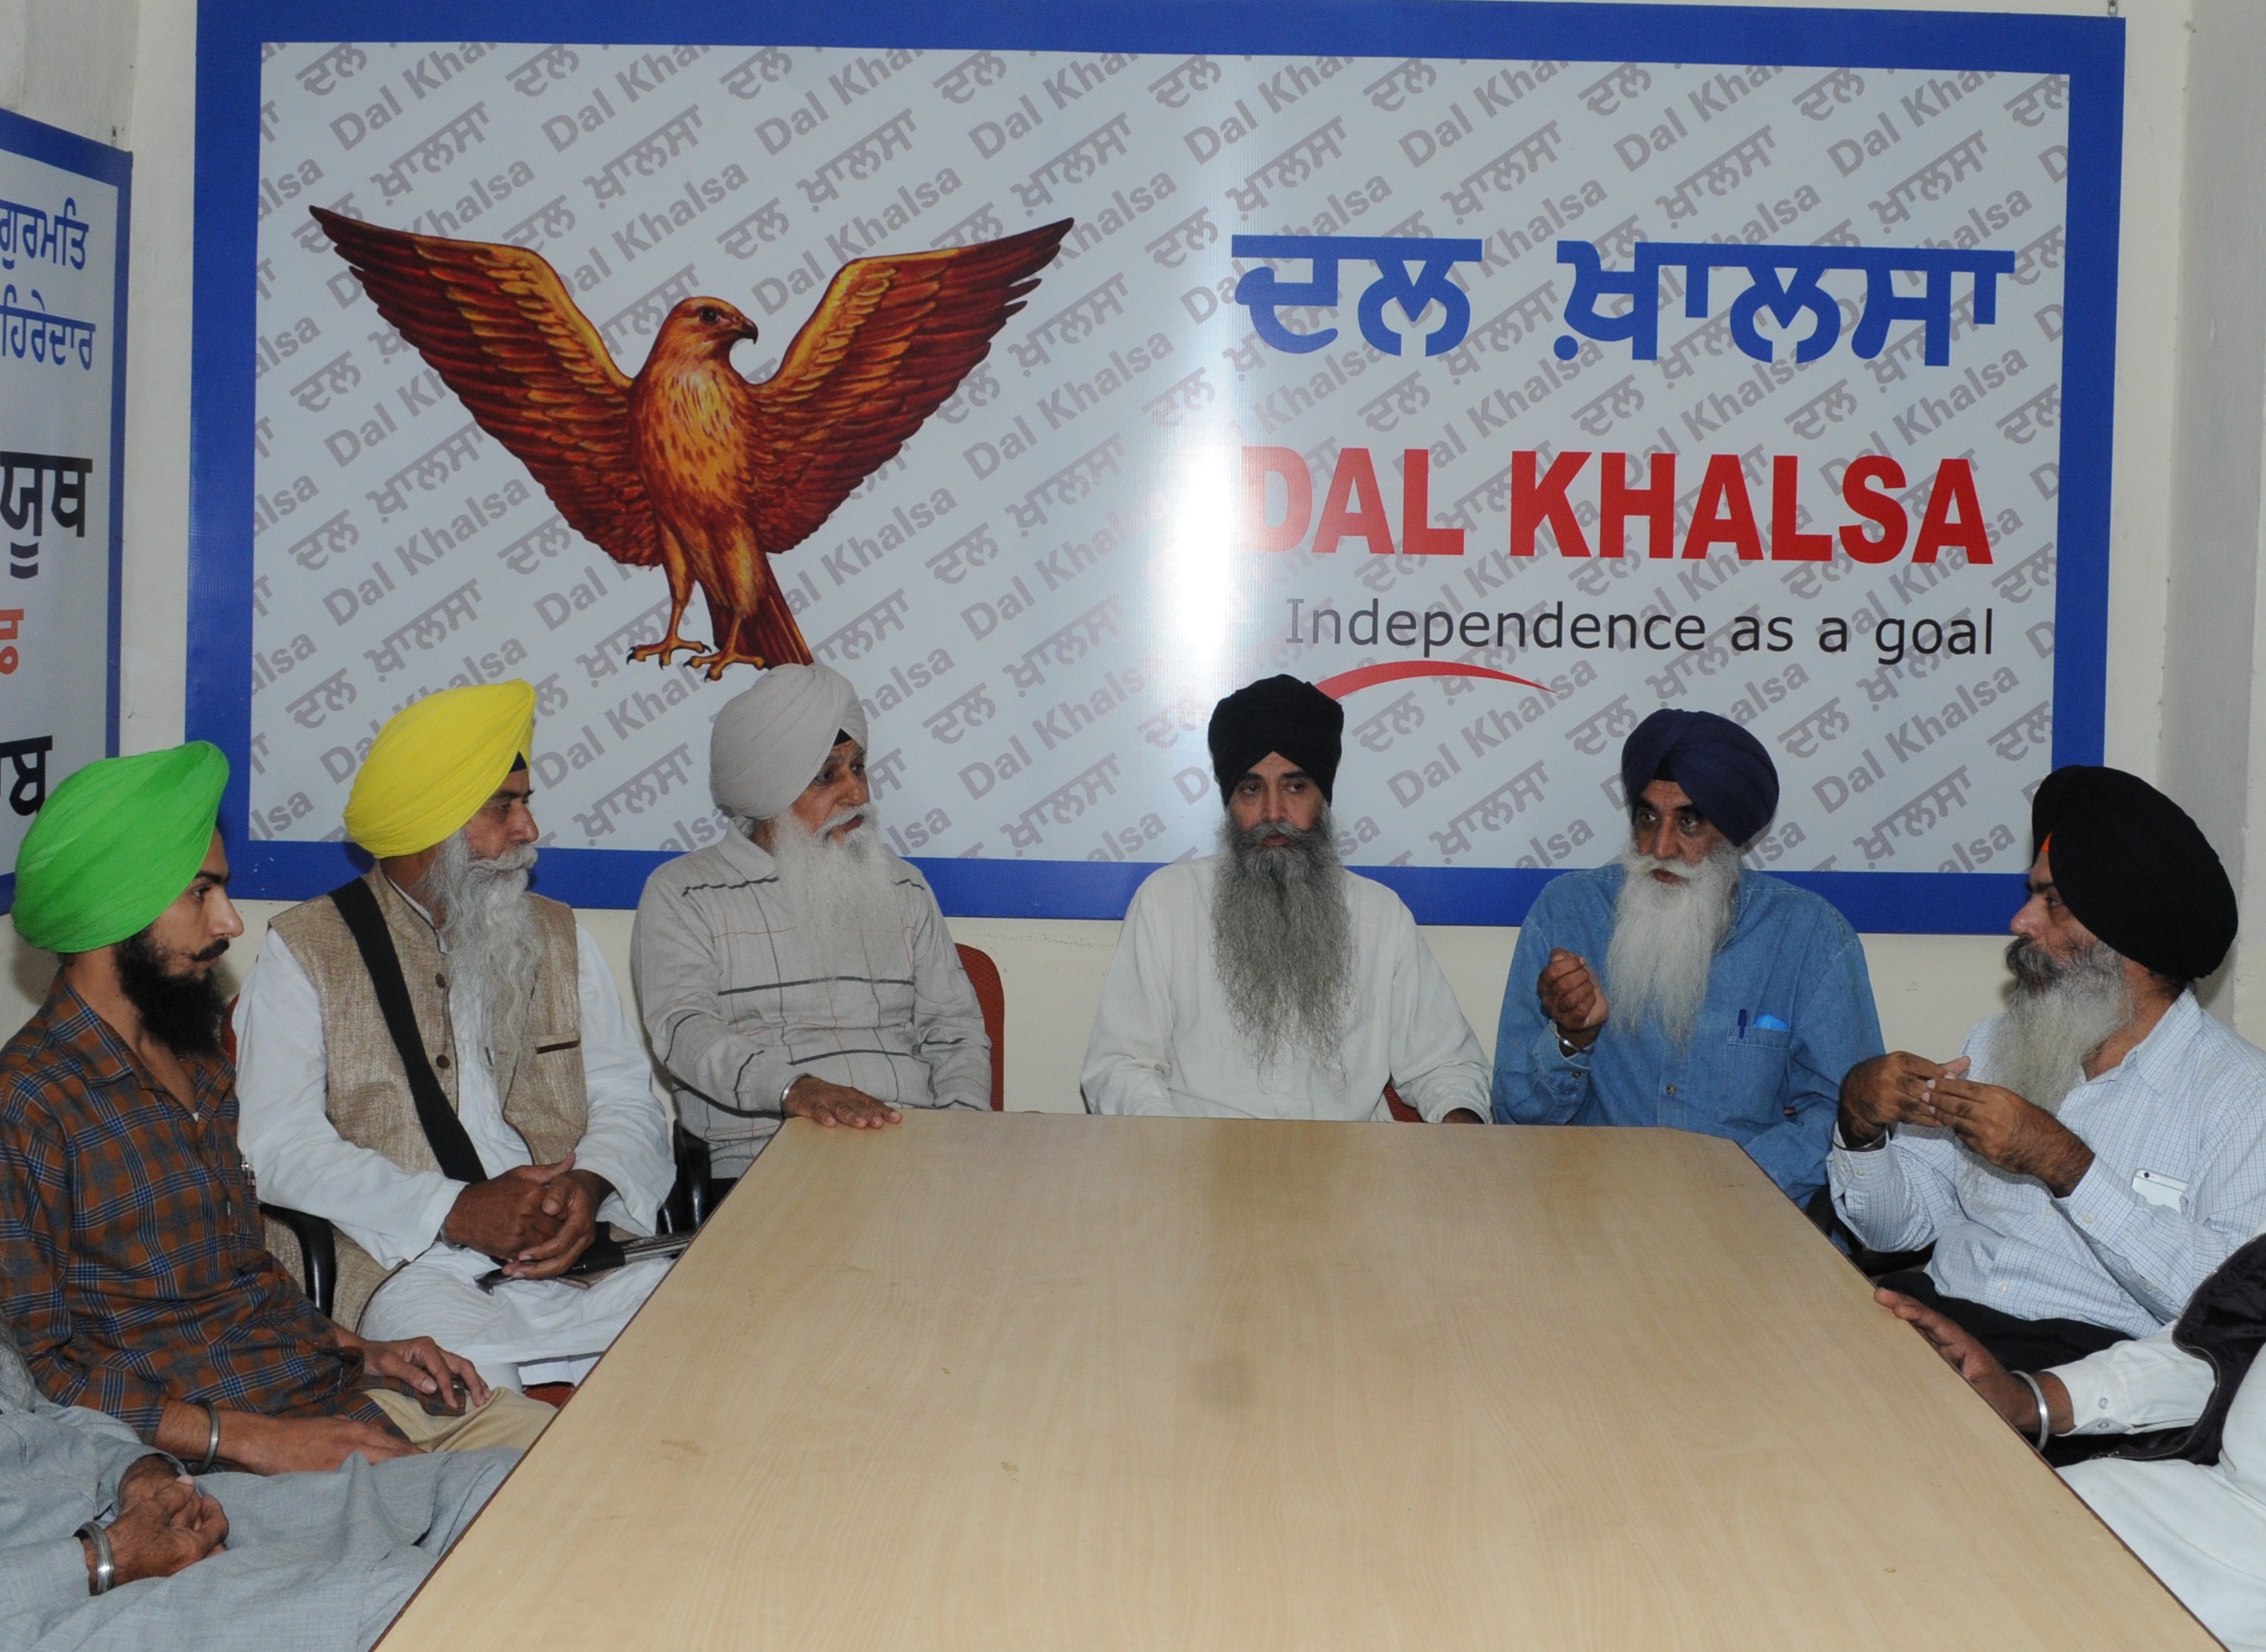  We would take part in the congregation as Sangat (humble Sikh) - Dal Khalsa 